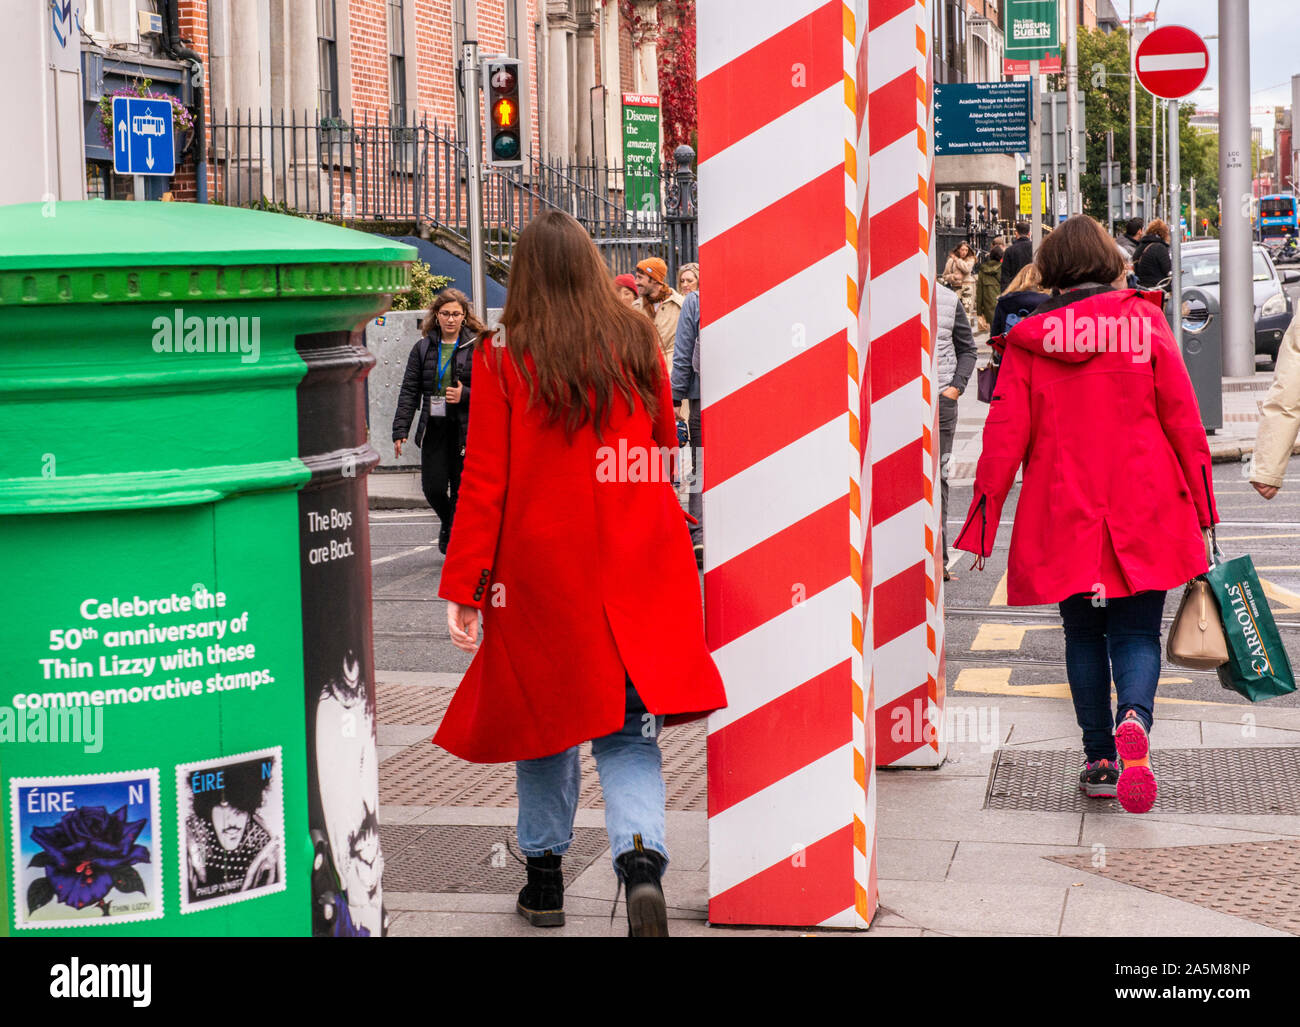 Pedestrians on busy walkway, green mailbox on pavement, Dublin, Ireland, UK Stock Photo